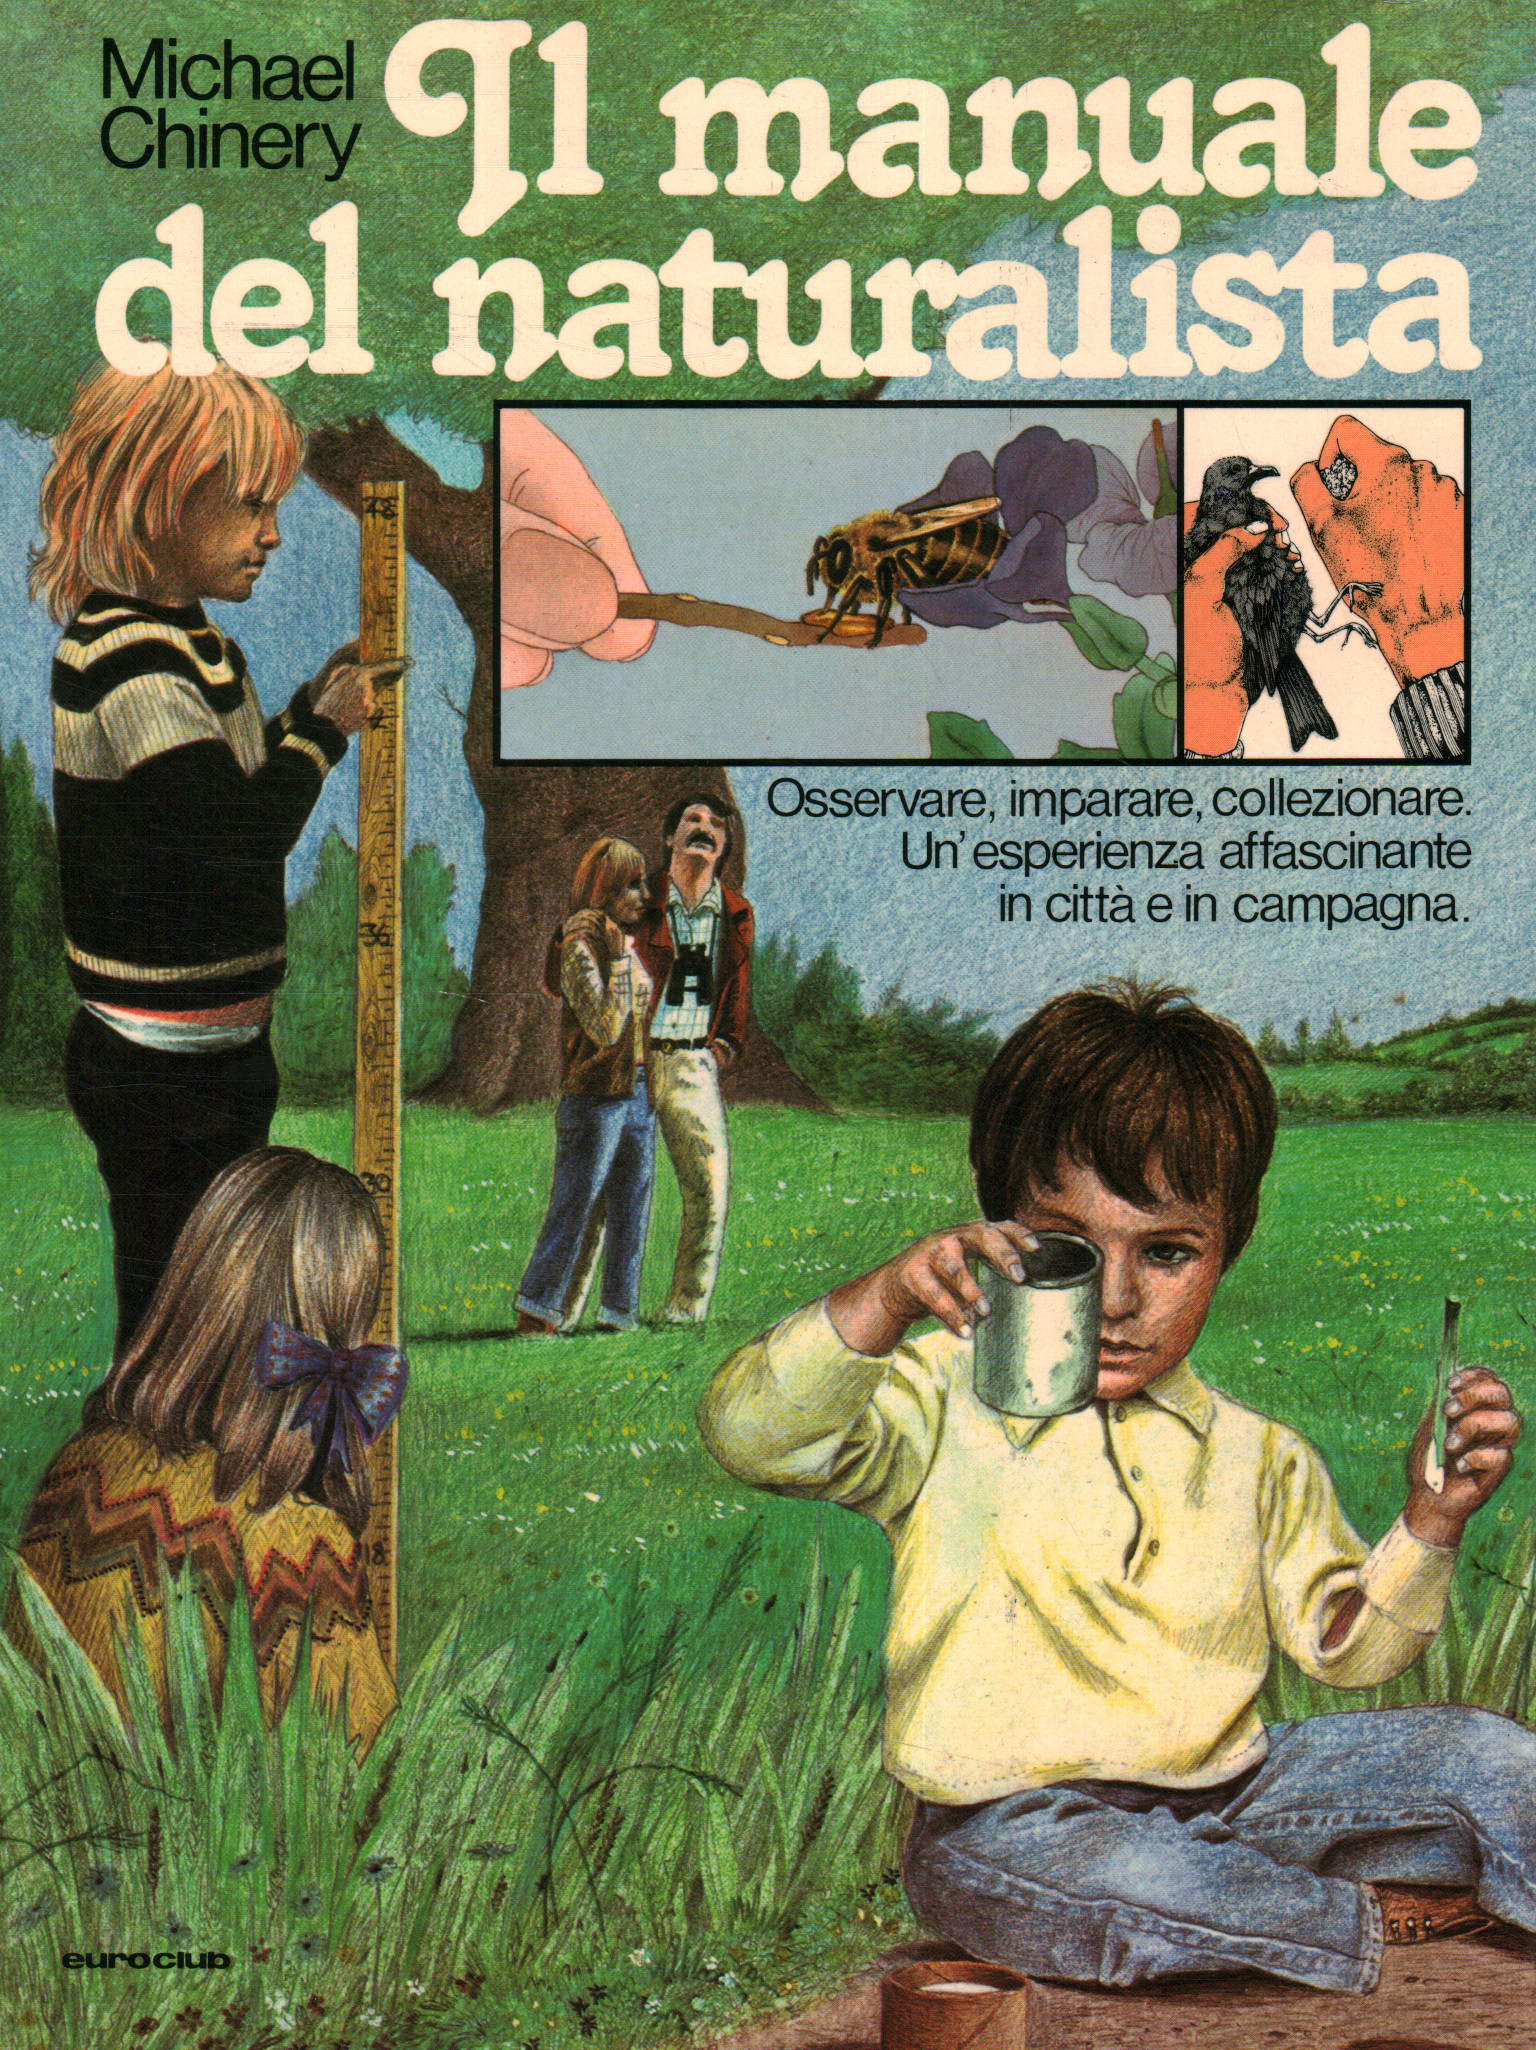 The Naturalist's Handbook